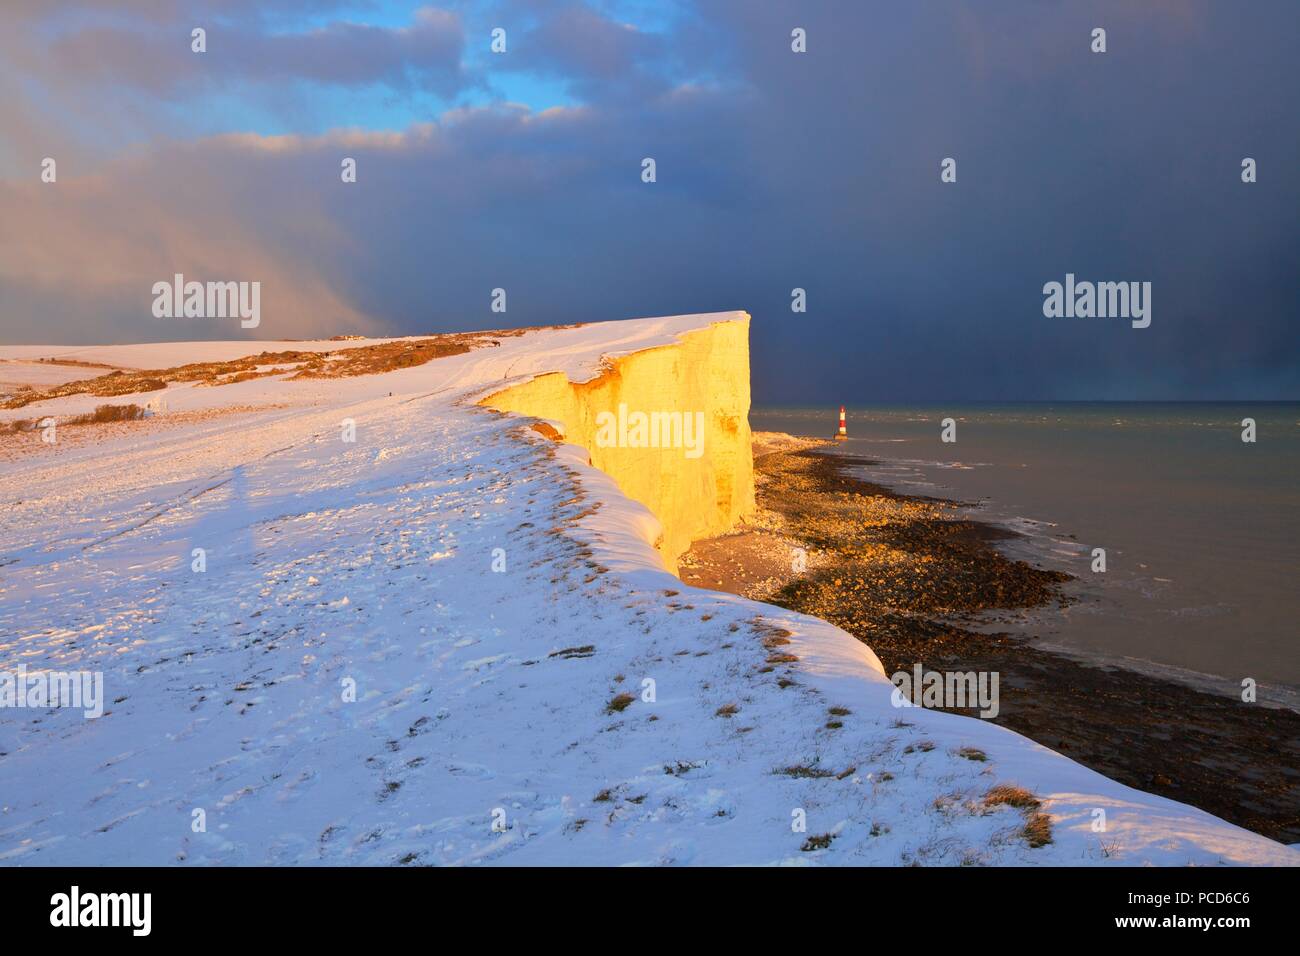 Cubiertas de nieve y faro Beachy Head, Eastbourne cerros Estate, Eastbourne, East Sussex, Inglaterra, Reino Unido, Europa Foto de stock